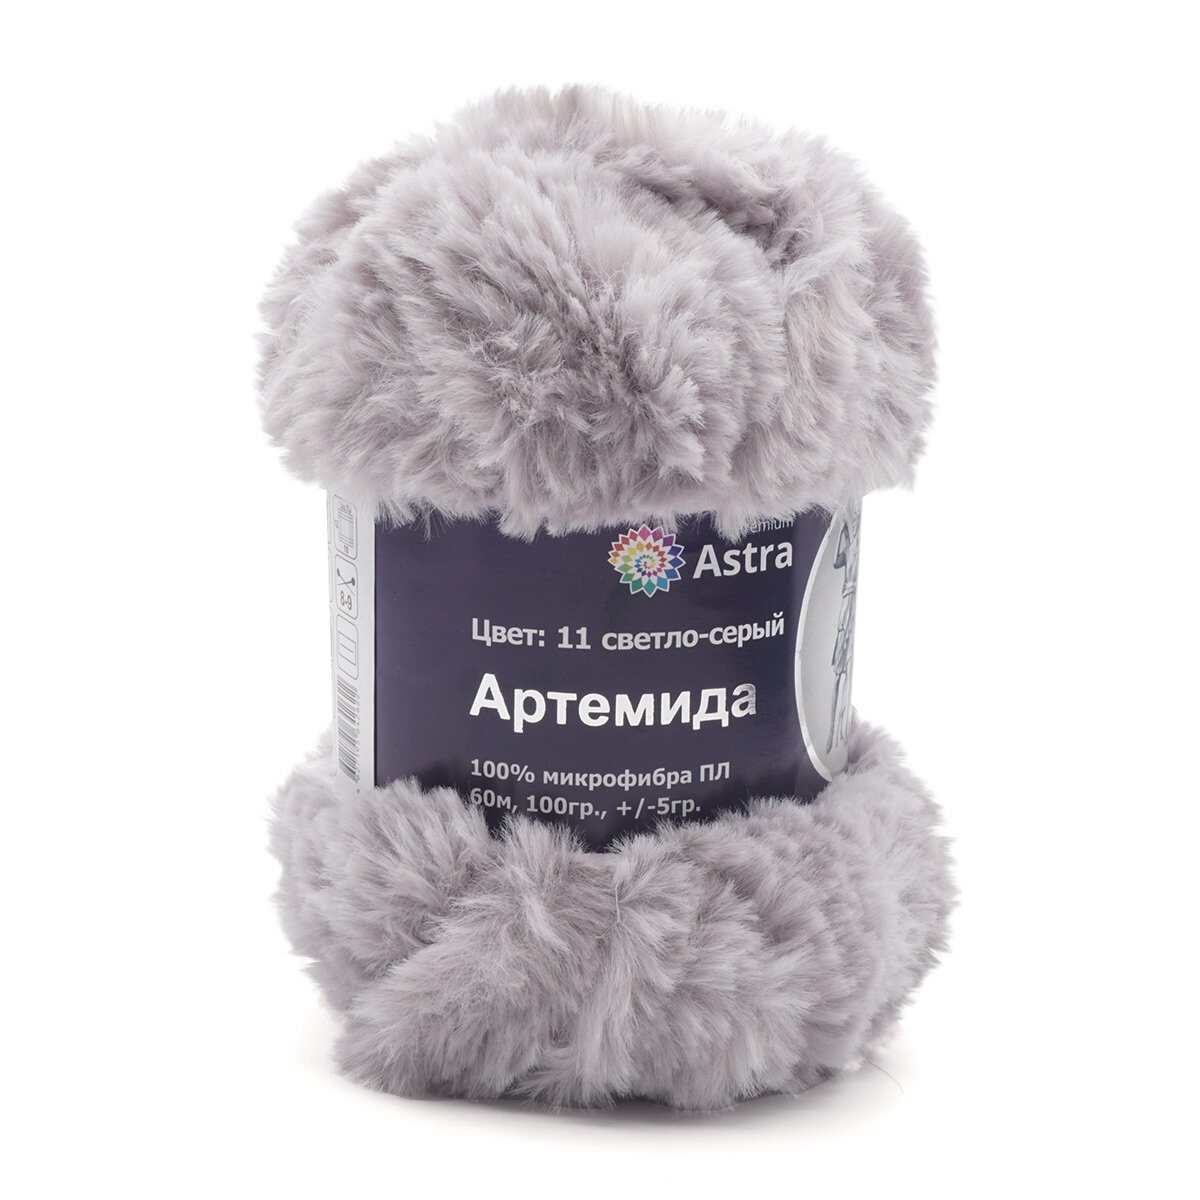 Пряжа для вязания Astra Premium 'Артемида', 100 г, 60 м (100% микрофибра ПЛ) (11 светло-серый), 3 мотка